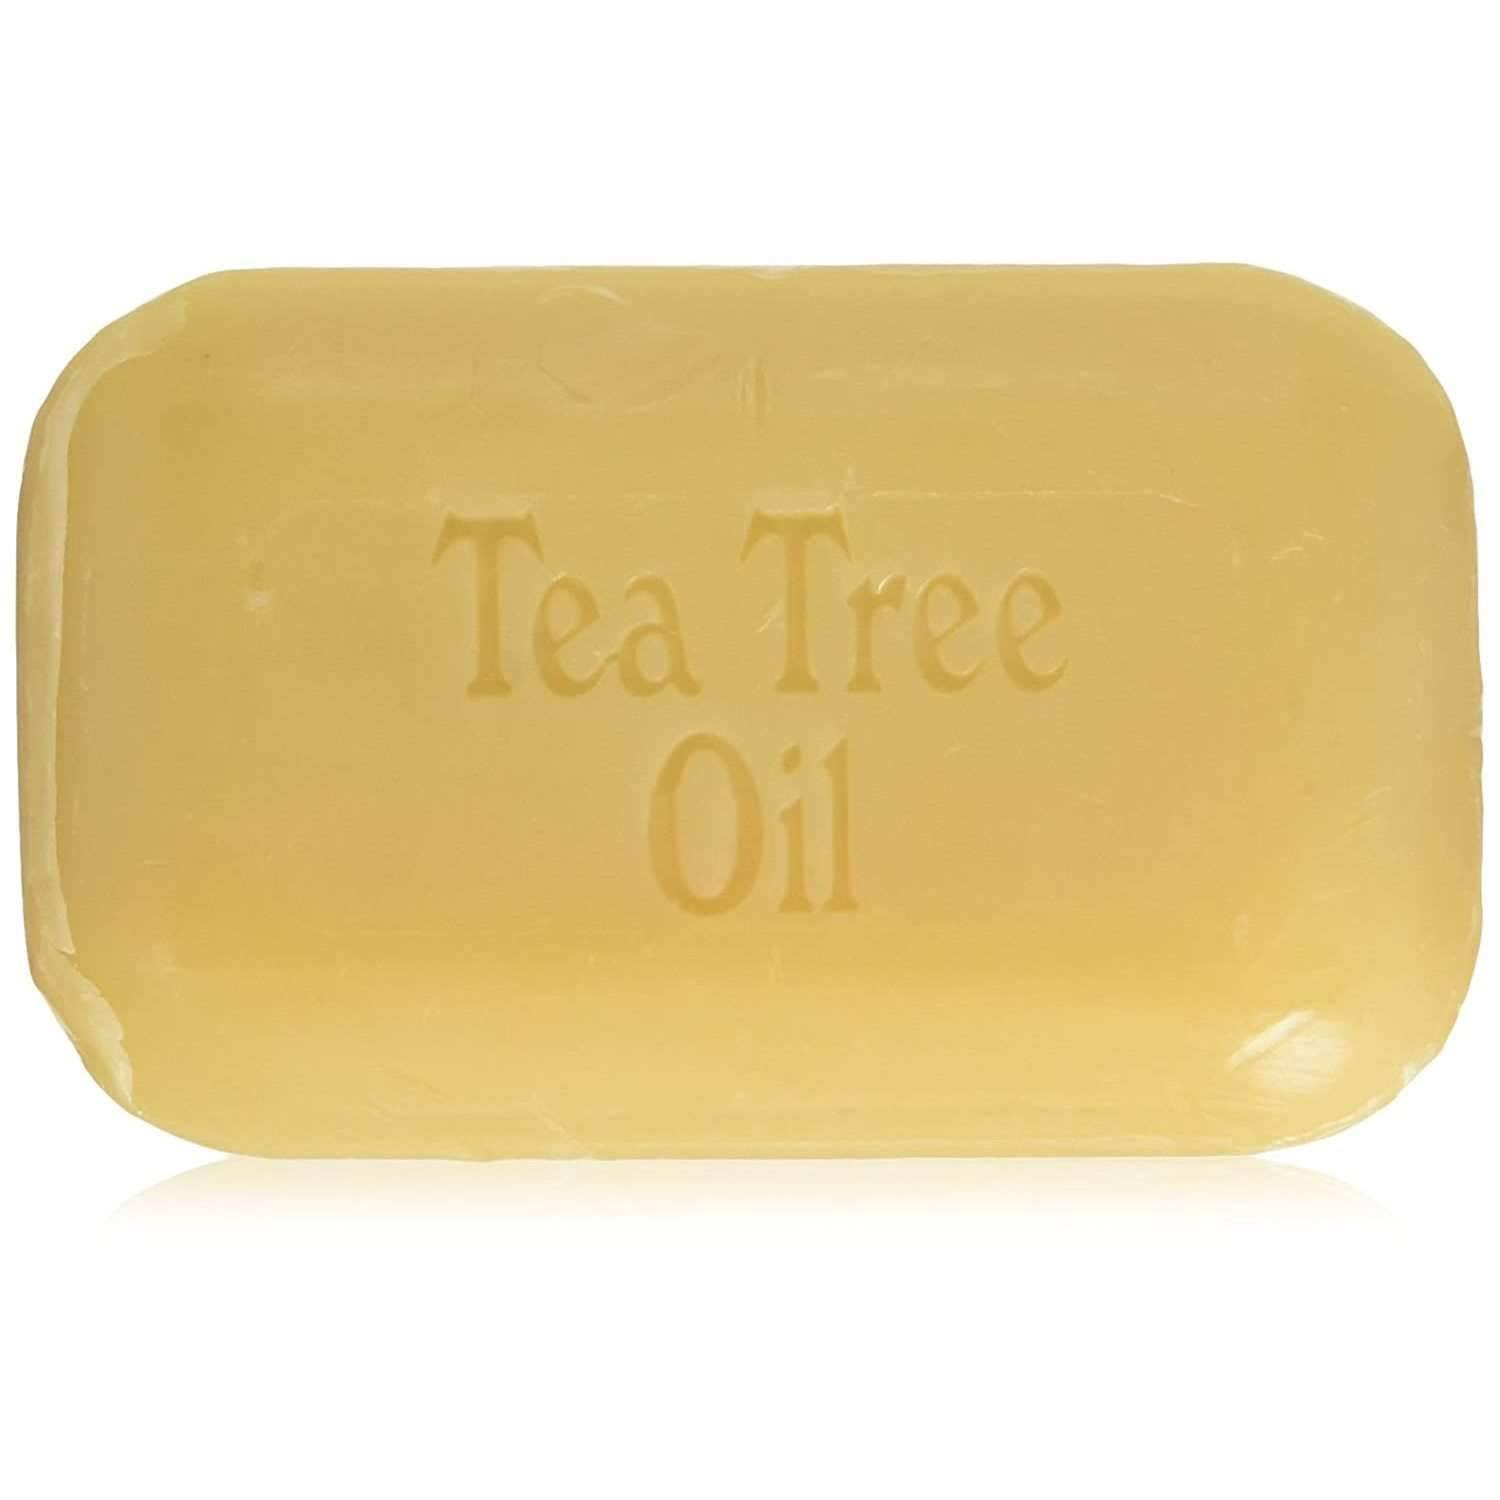 Soap Works Tea Tree Oil Bar Soap